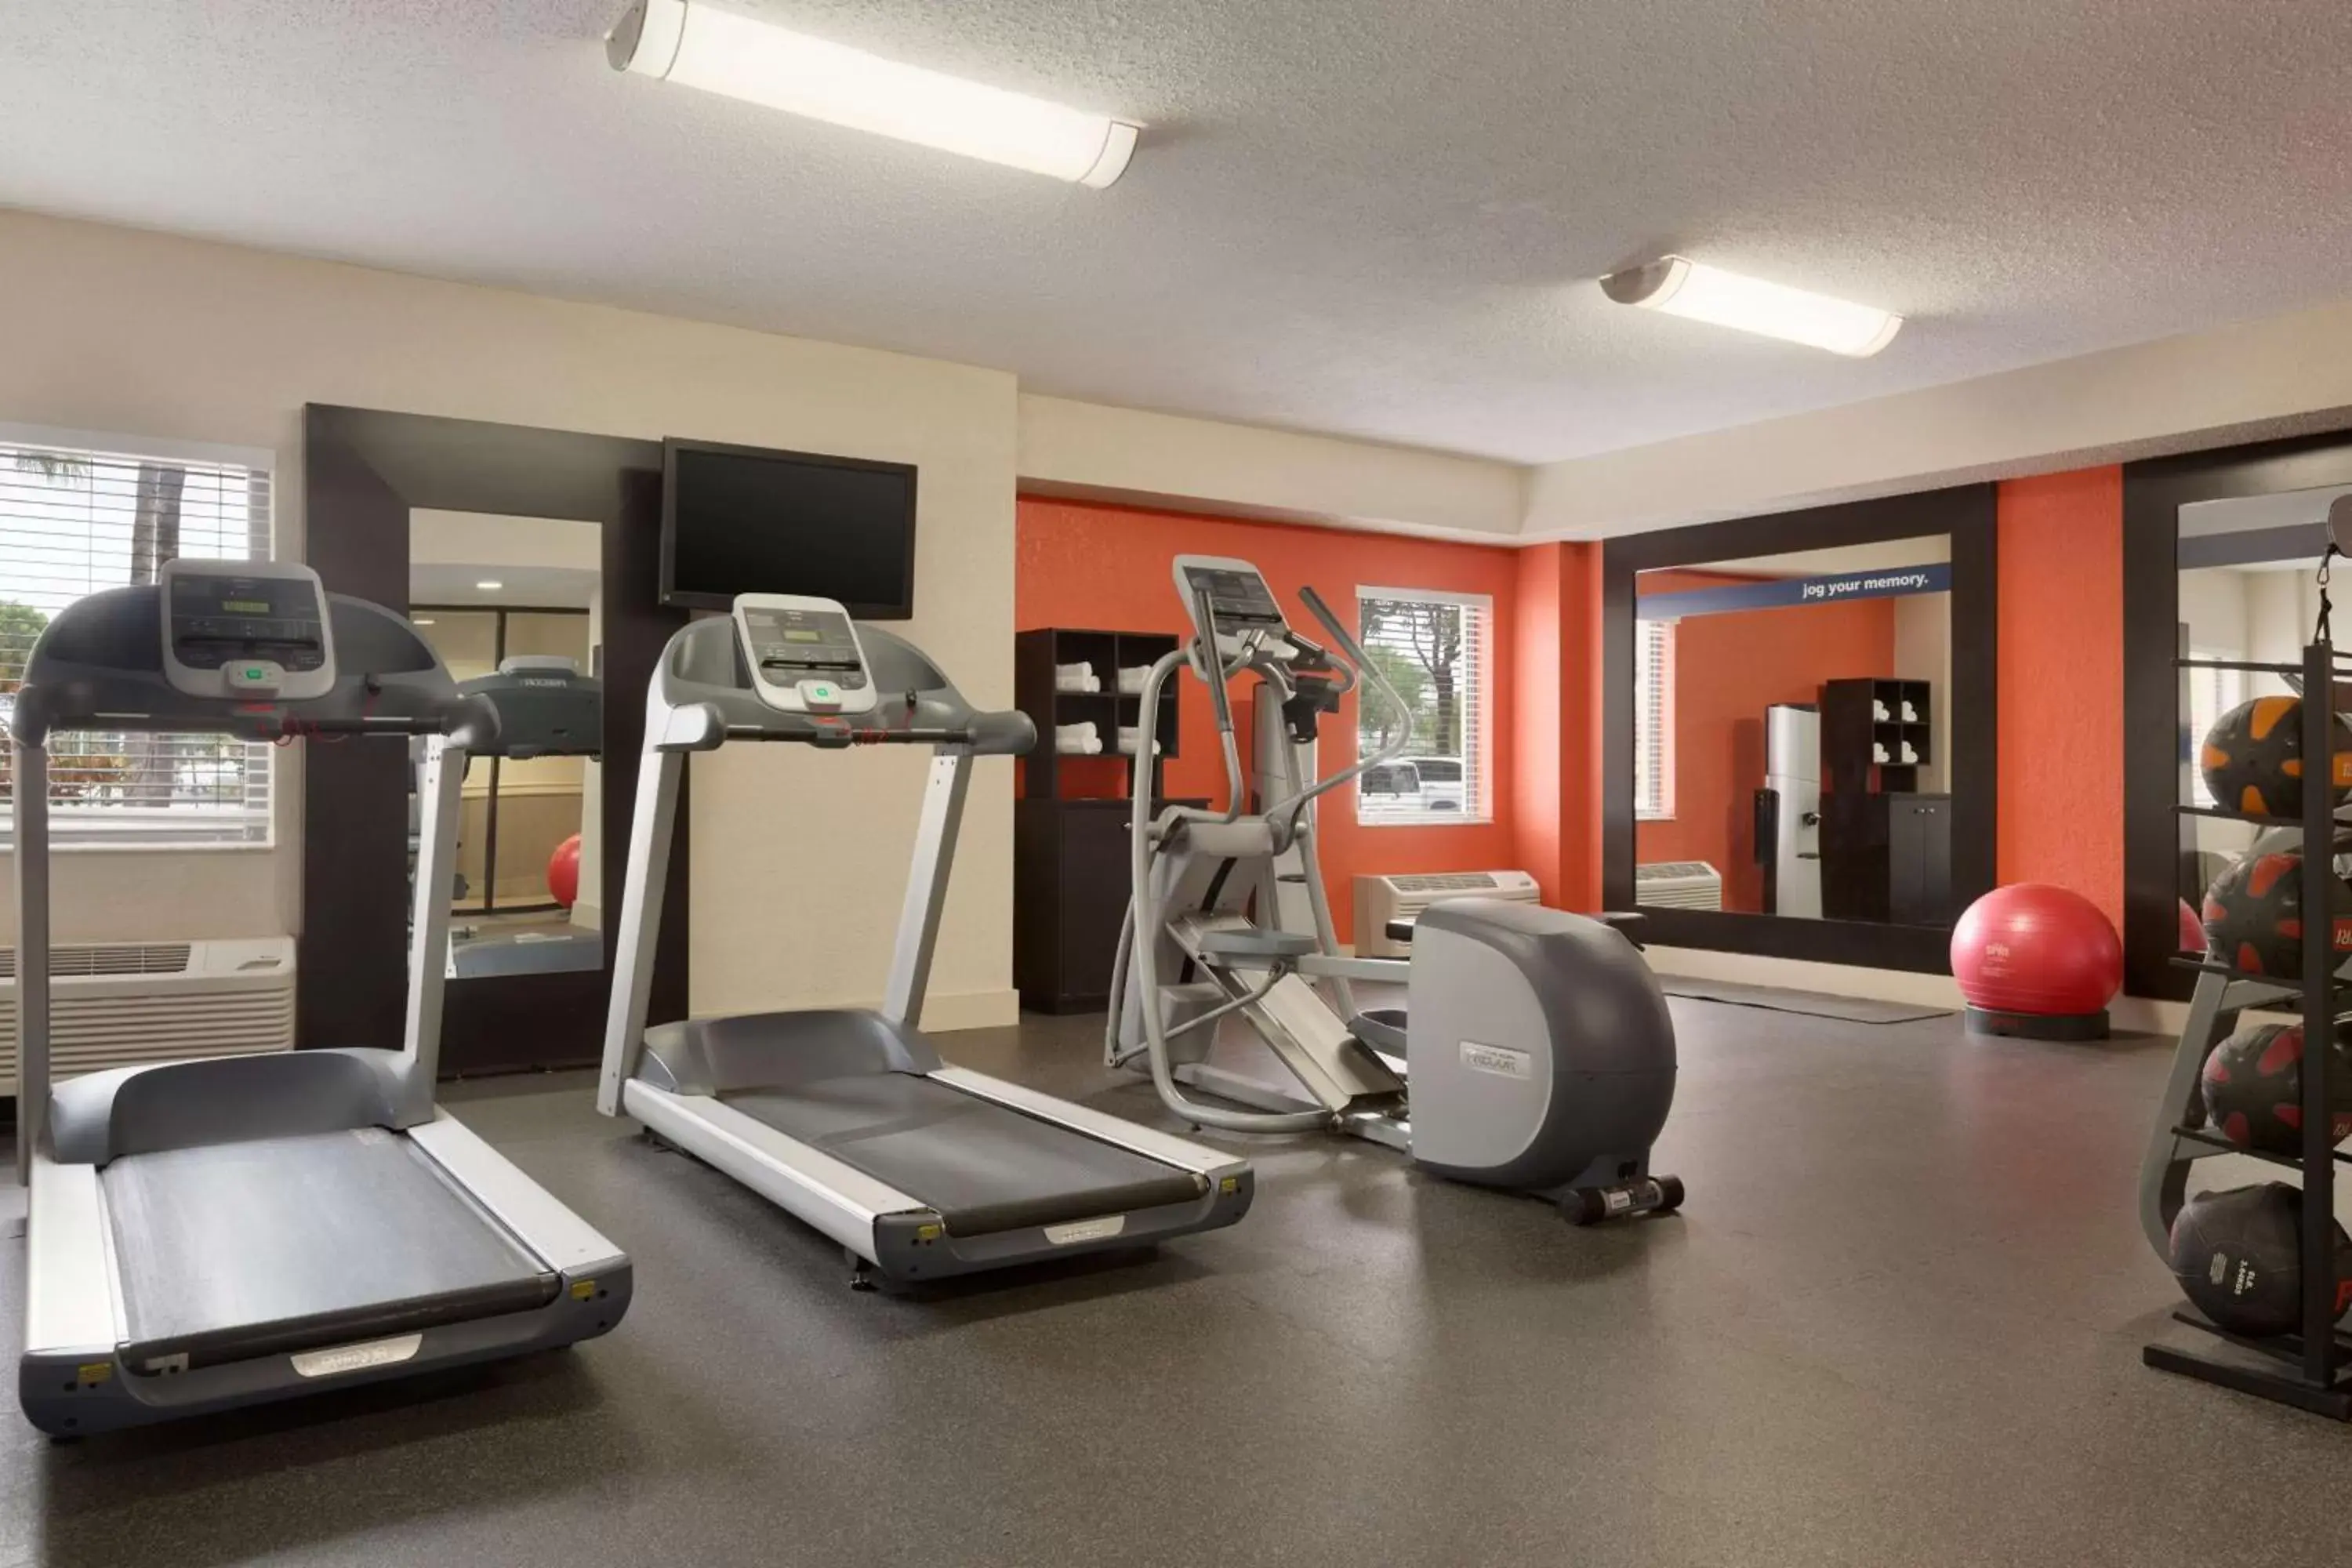 Fitness centre/facilities, Fitness Center/Facilities in Hampton Inn Miami-Airport West